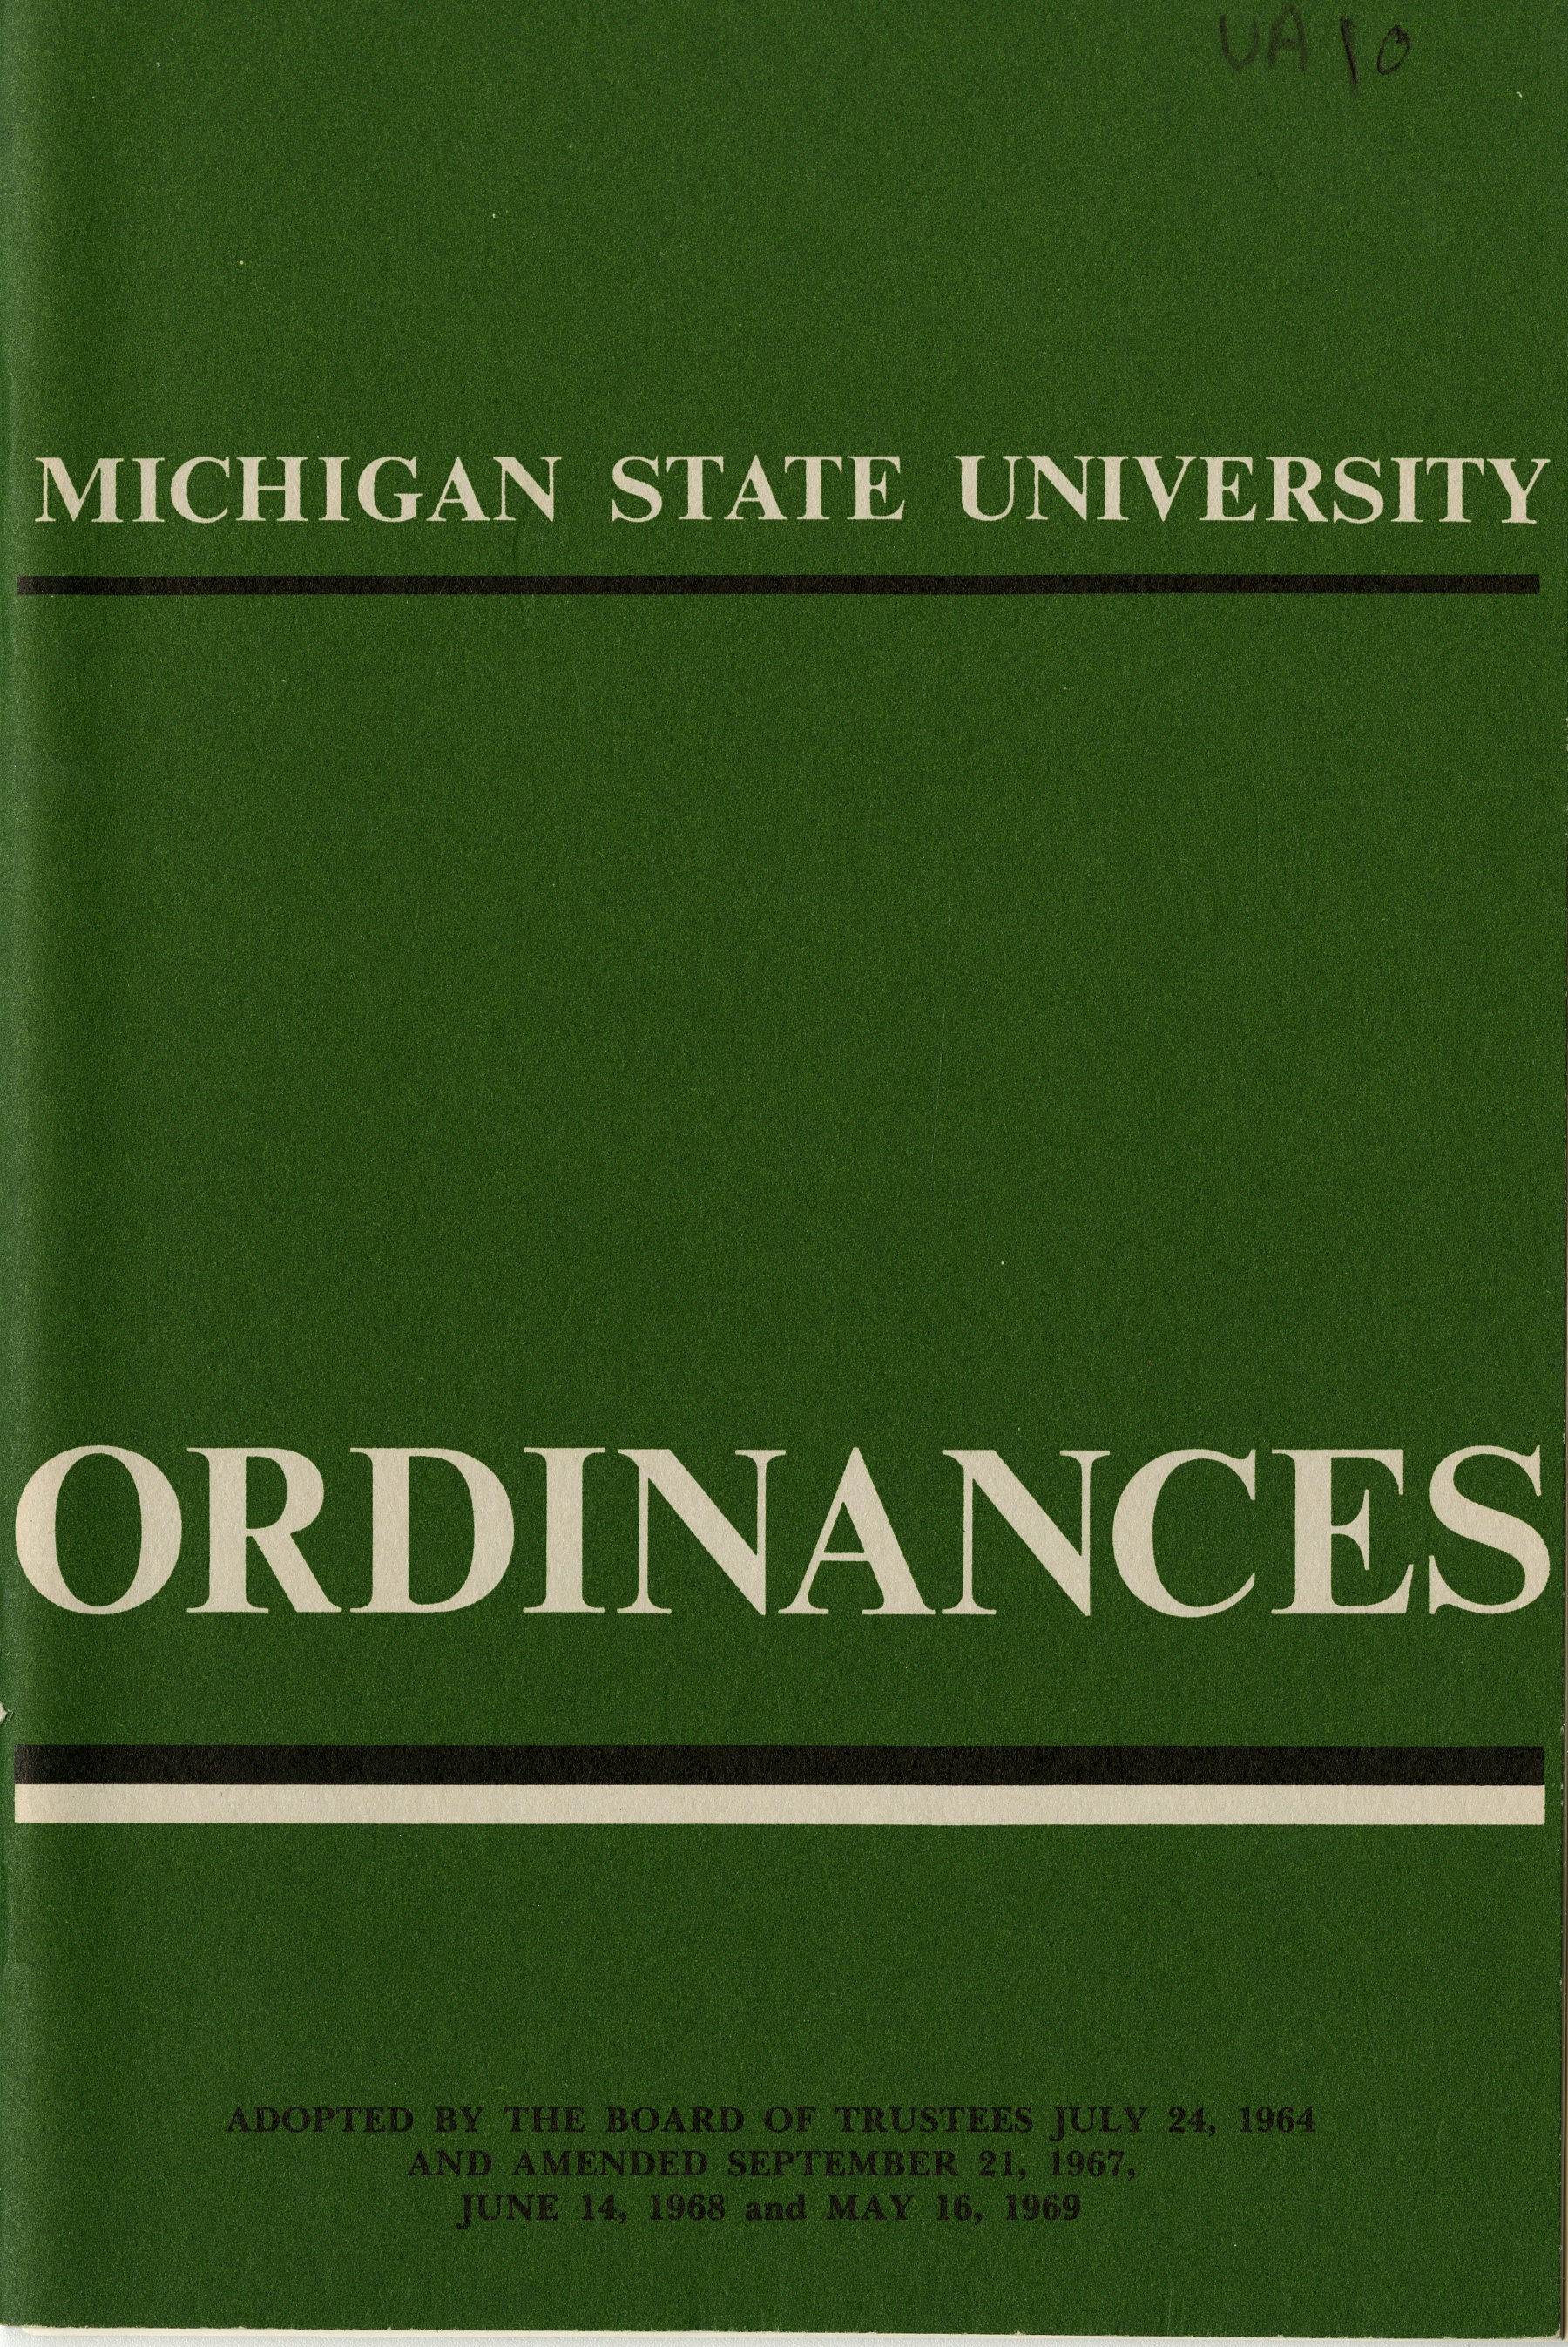 MSU Ordinances, 1969